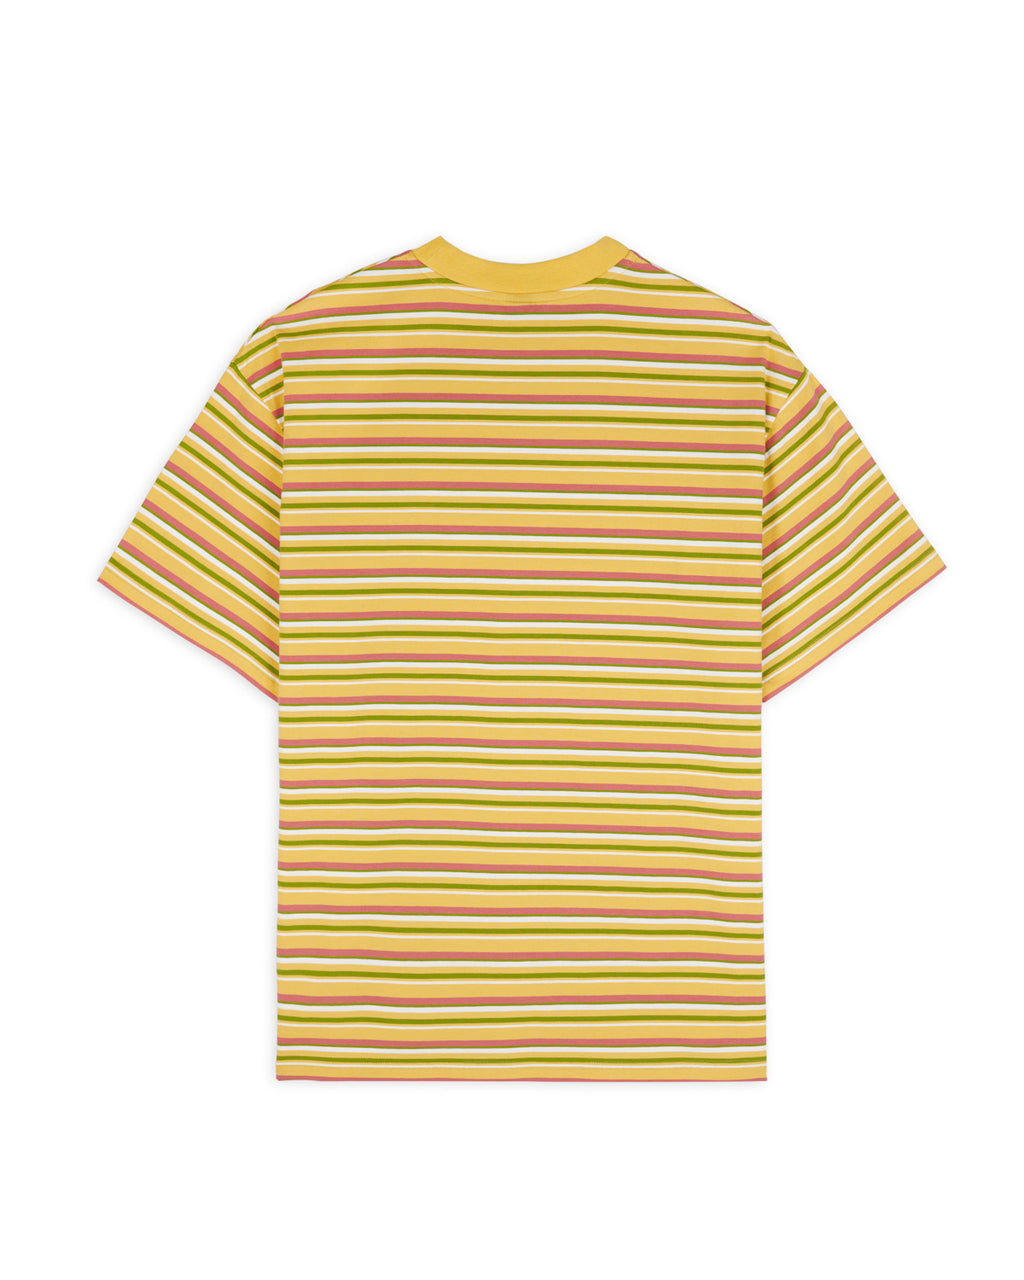 Nineties Blocked Striped T-Shirt - Mustard 2